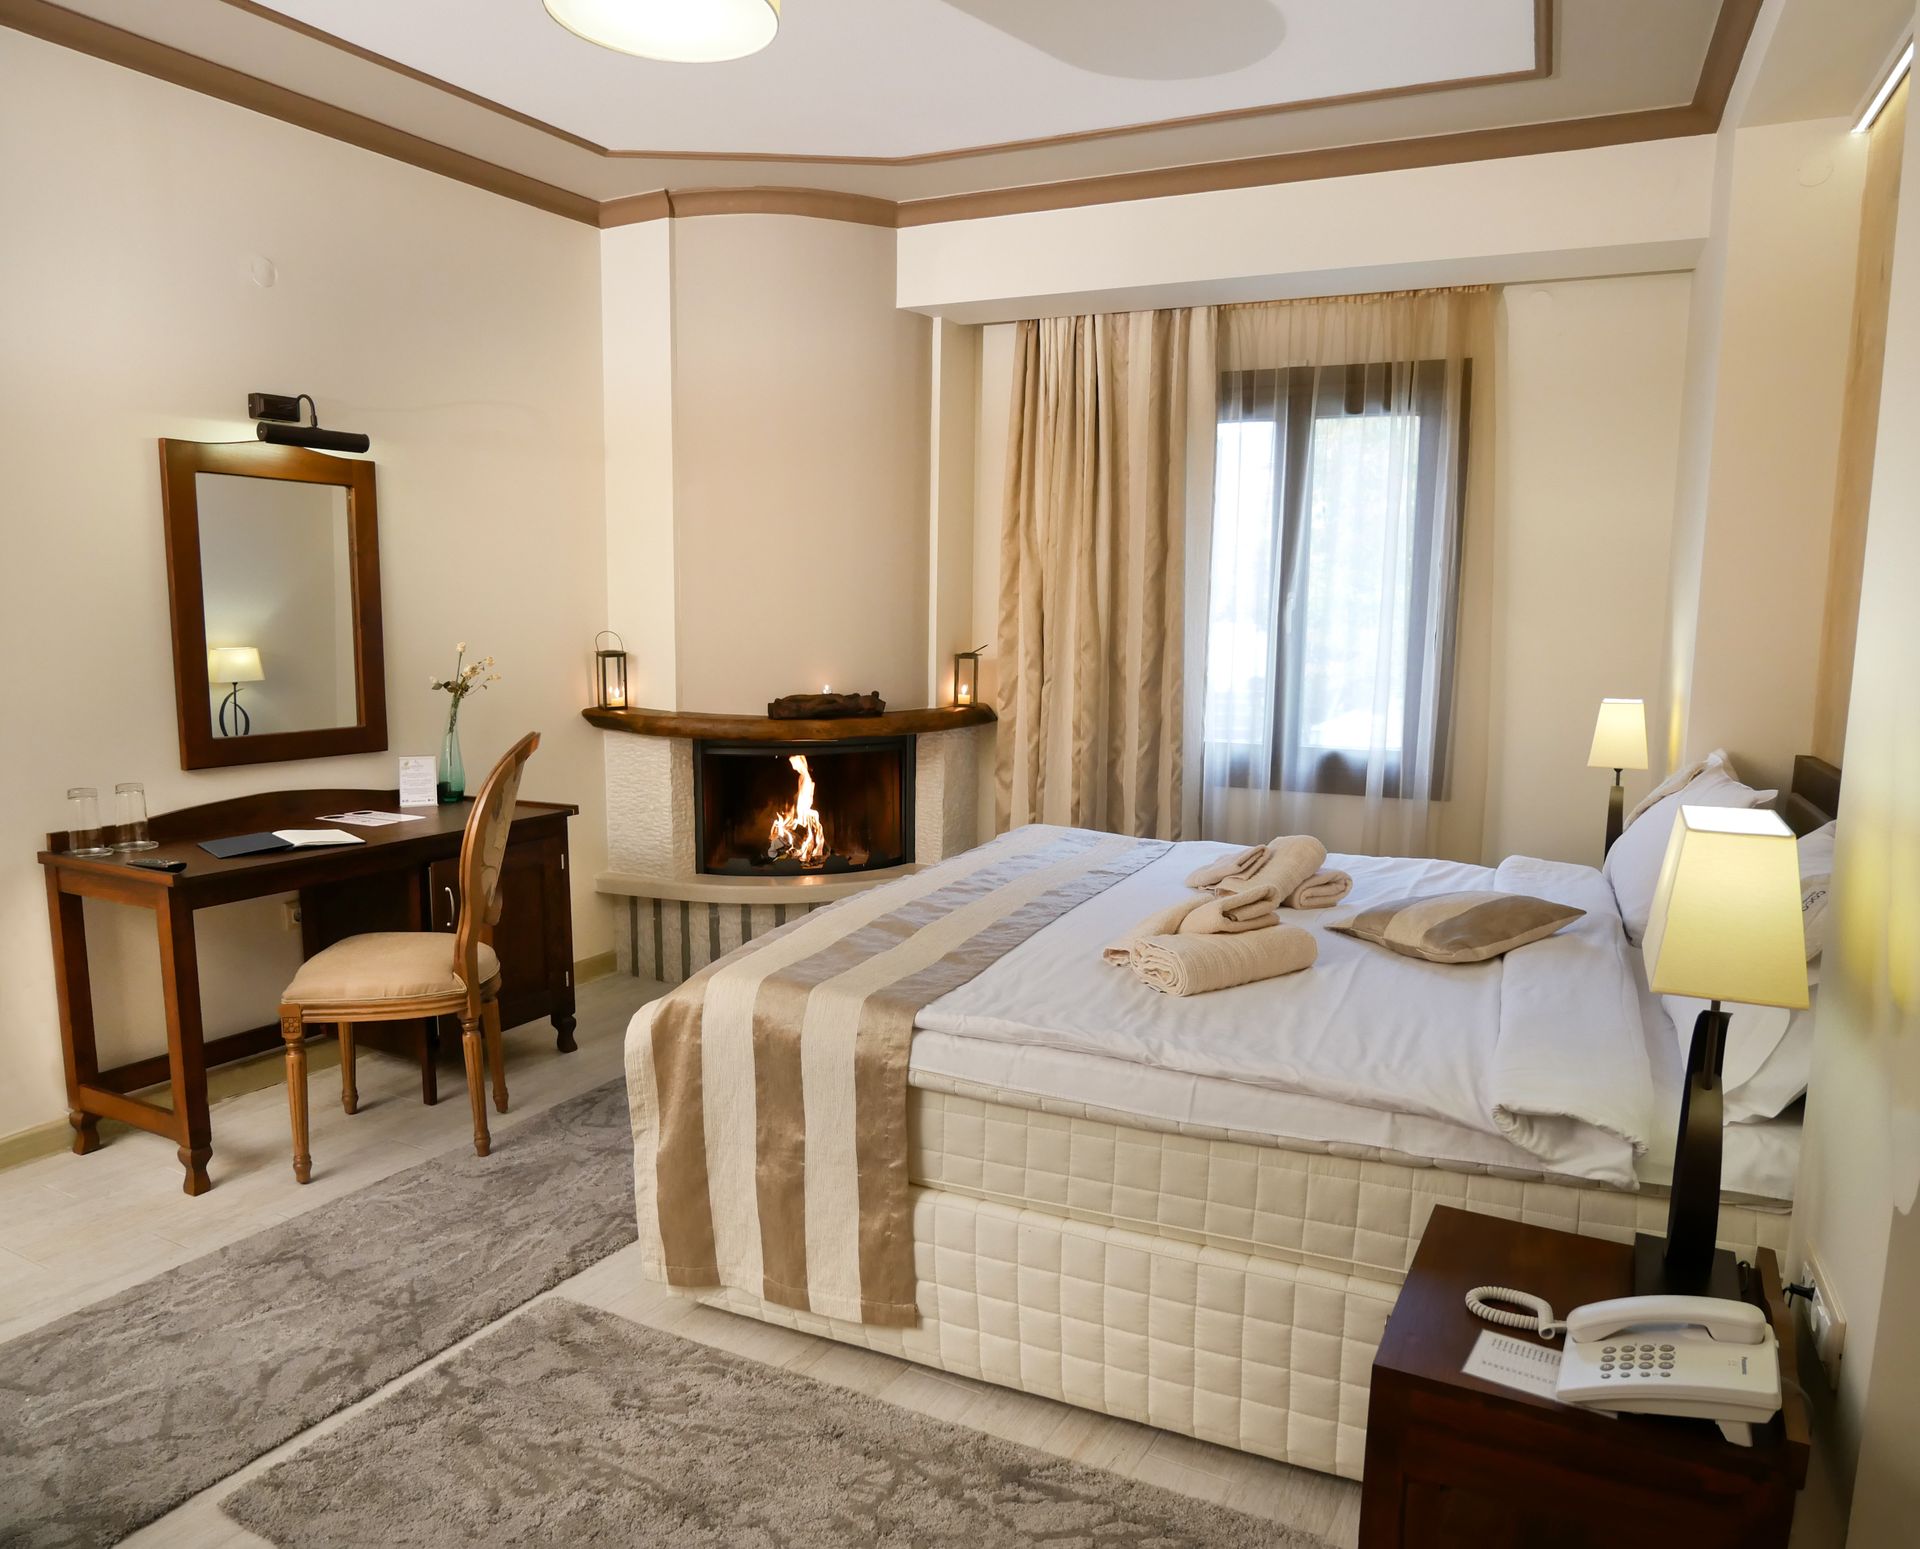 Rodovoli Hotel Konitsa - Κόνιτσα ✦ -30% ✦ 2 Ημέρες (1 Διανυκτέρευση) ✦ 2 άτομα + 1 παιδί έως 2 ετών ✦ Πρωινό ✦ έως 30/09/2020 ✦ Early check in και Late check out κατόπιν διαθεσιμότητας!